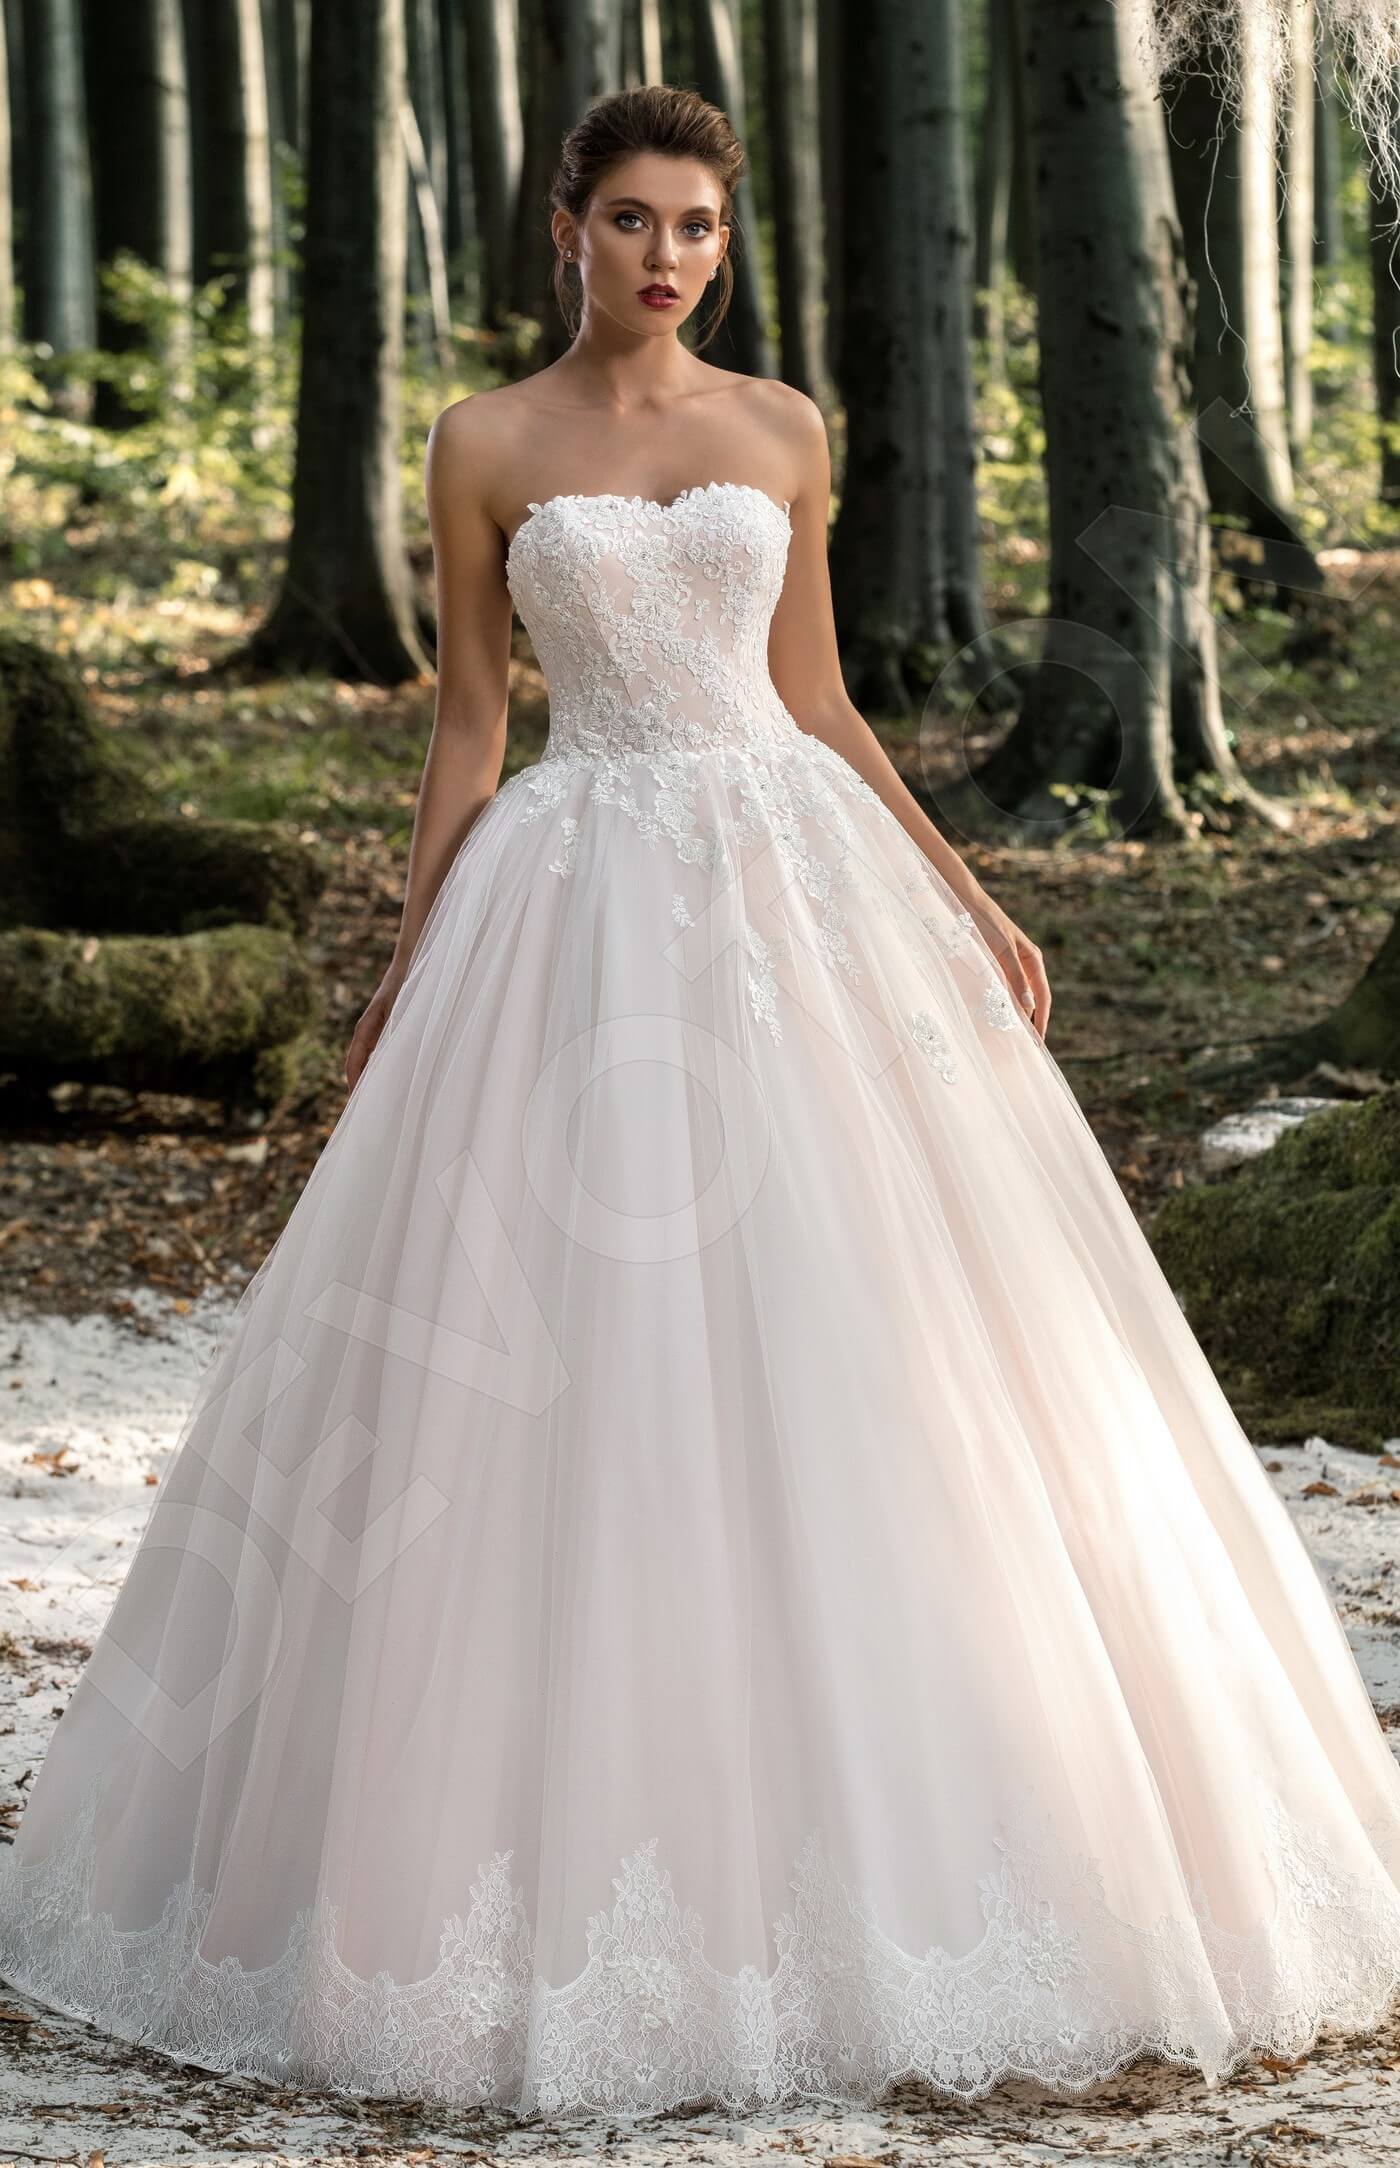 Marlin Open back Princess/Ball Gown Strapless Wedding Dress Front